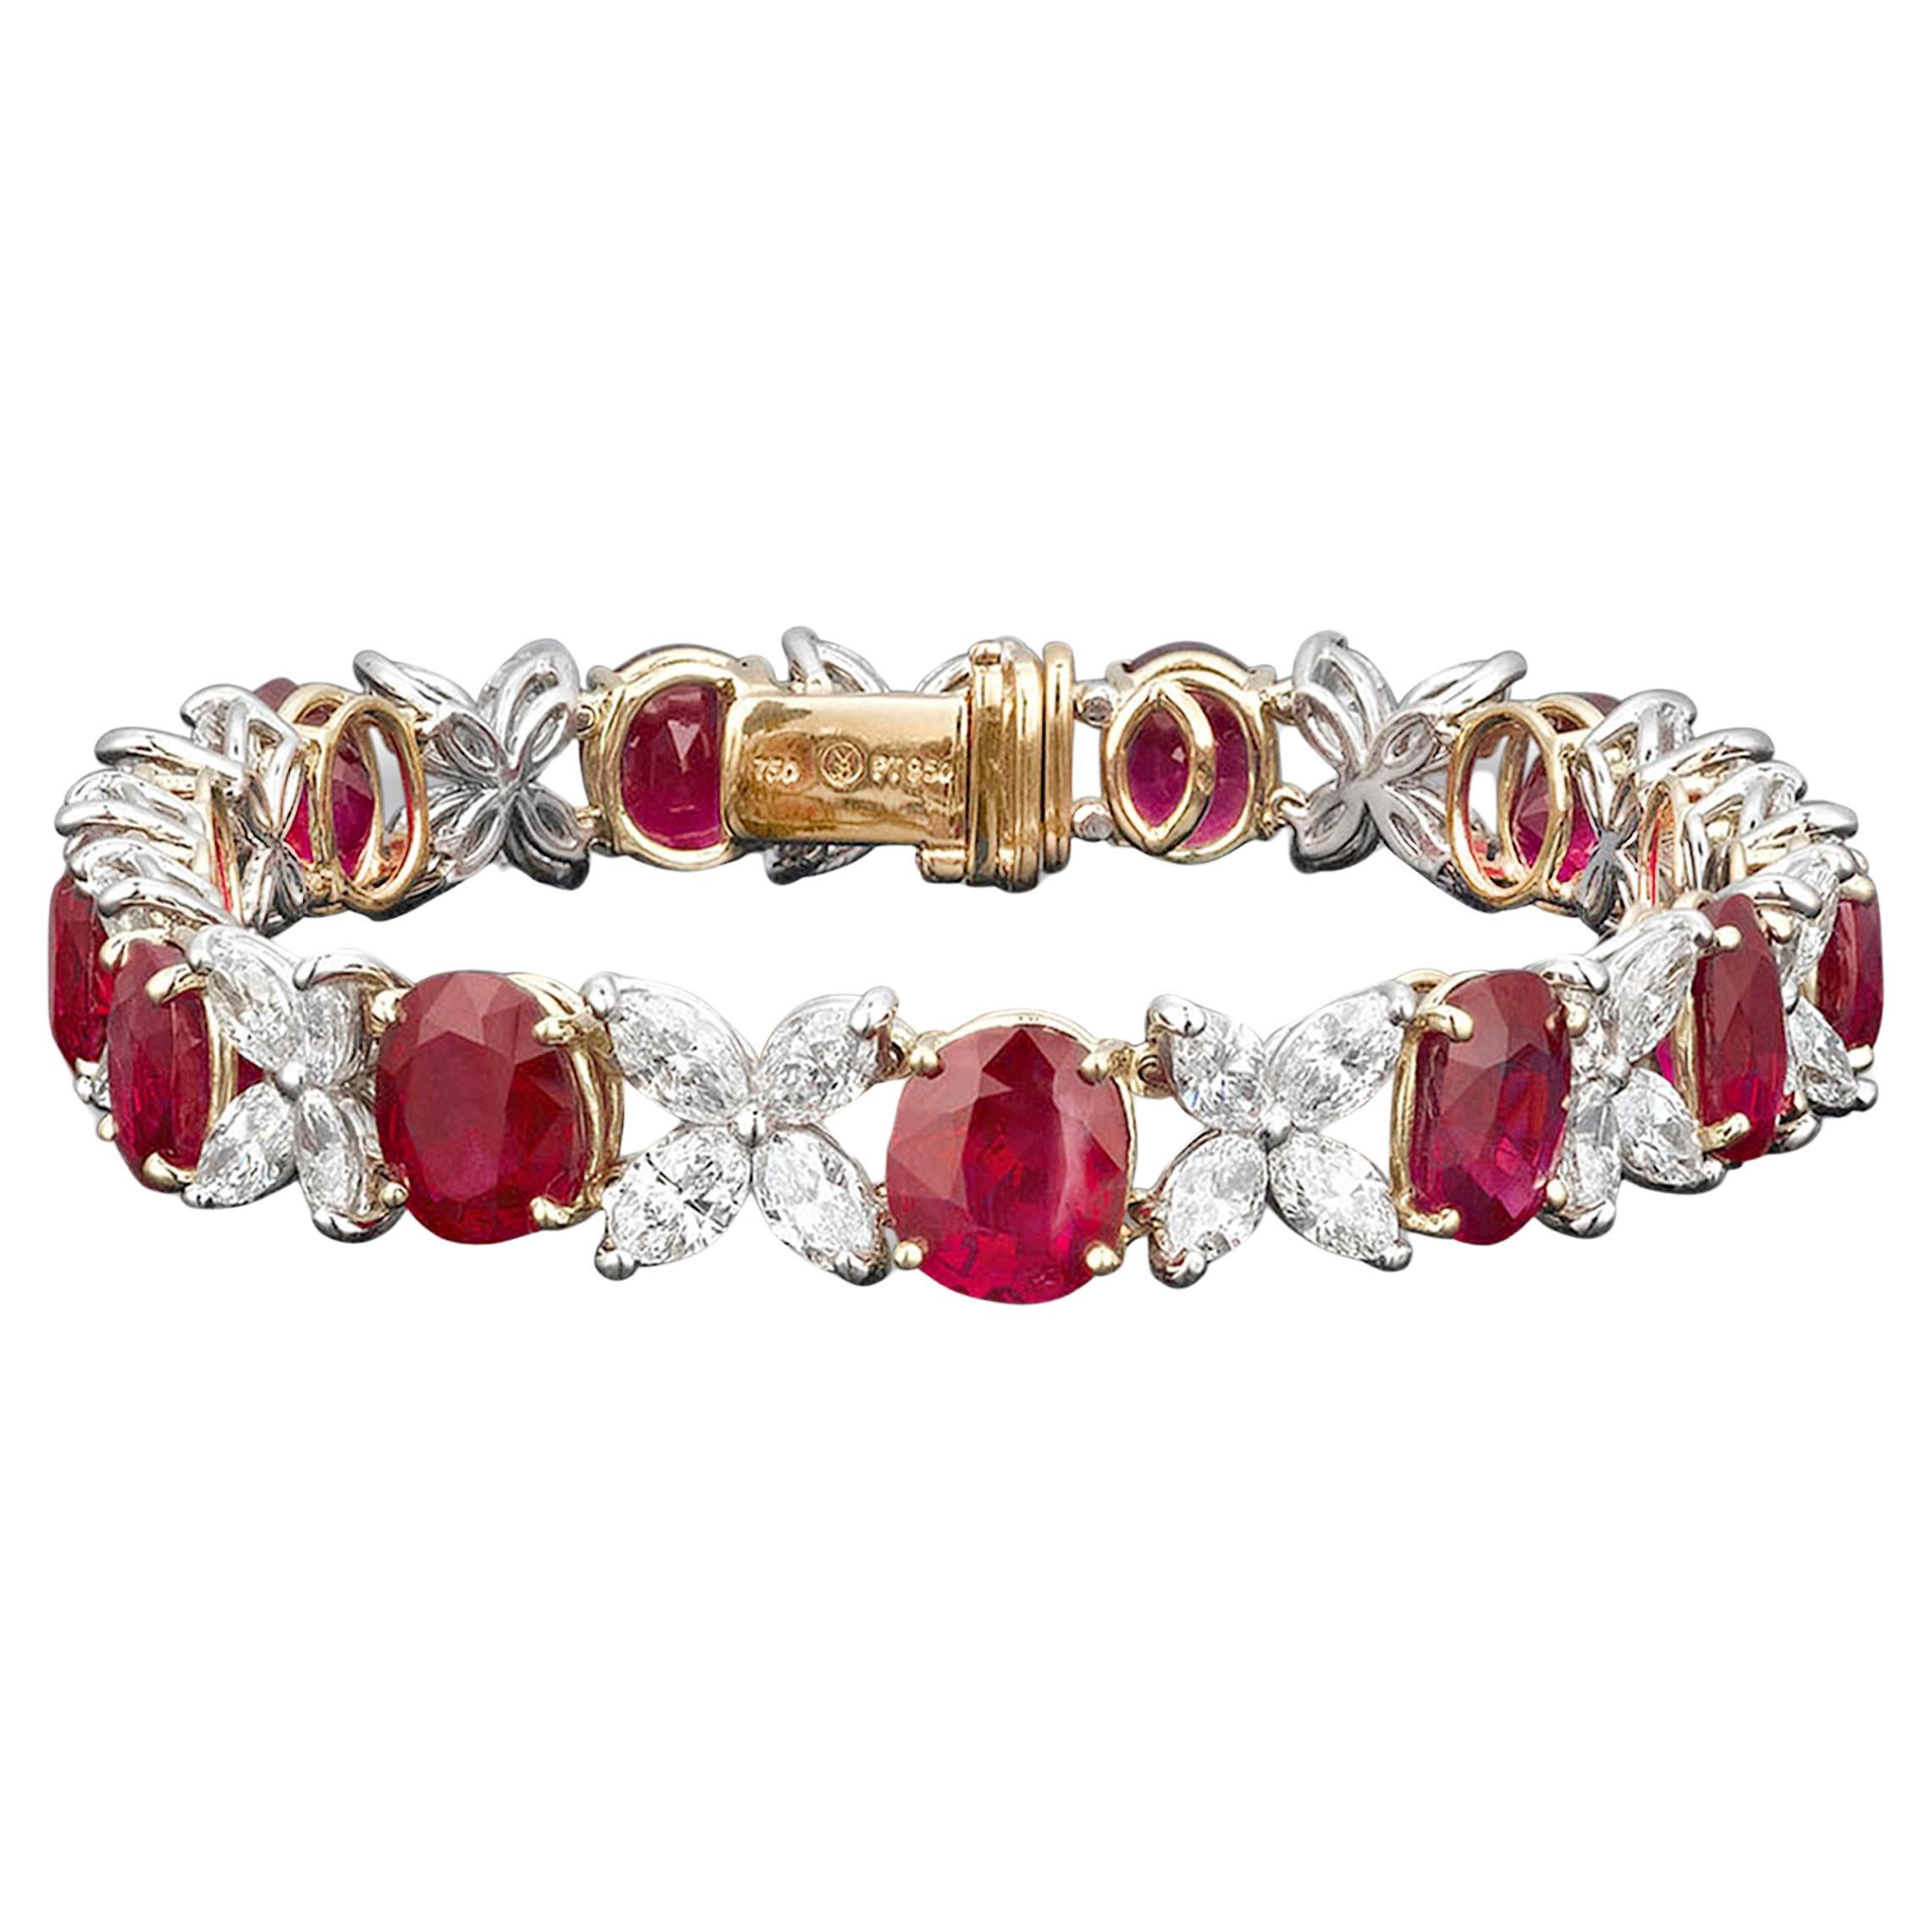 Untreated Burma Ruby And Diamond Bracelet, 21.16 Carats